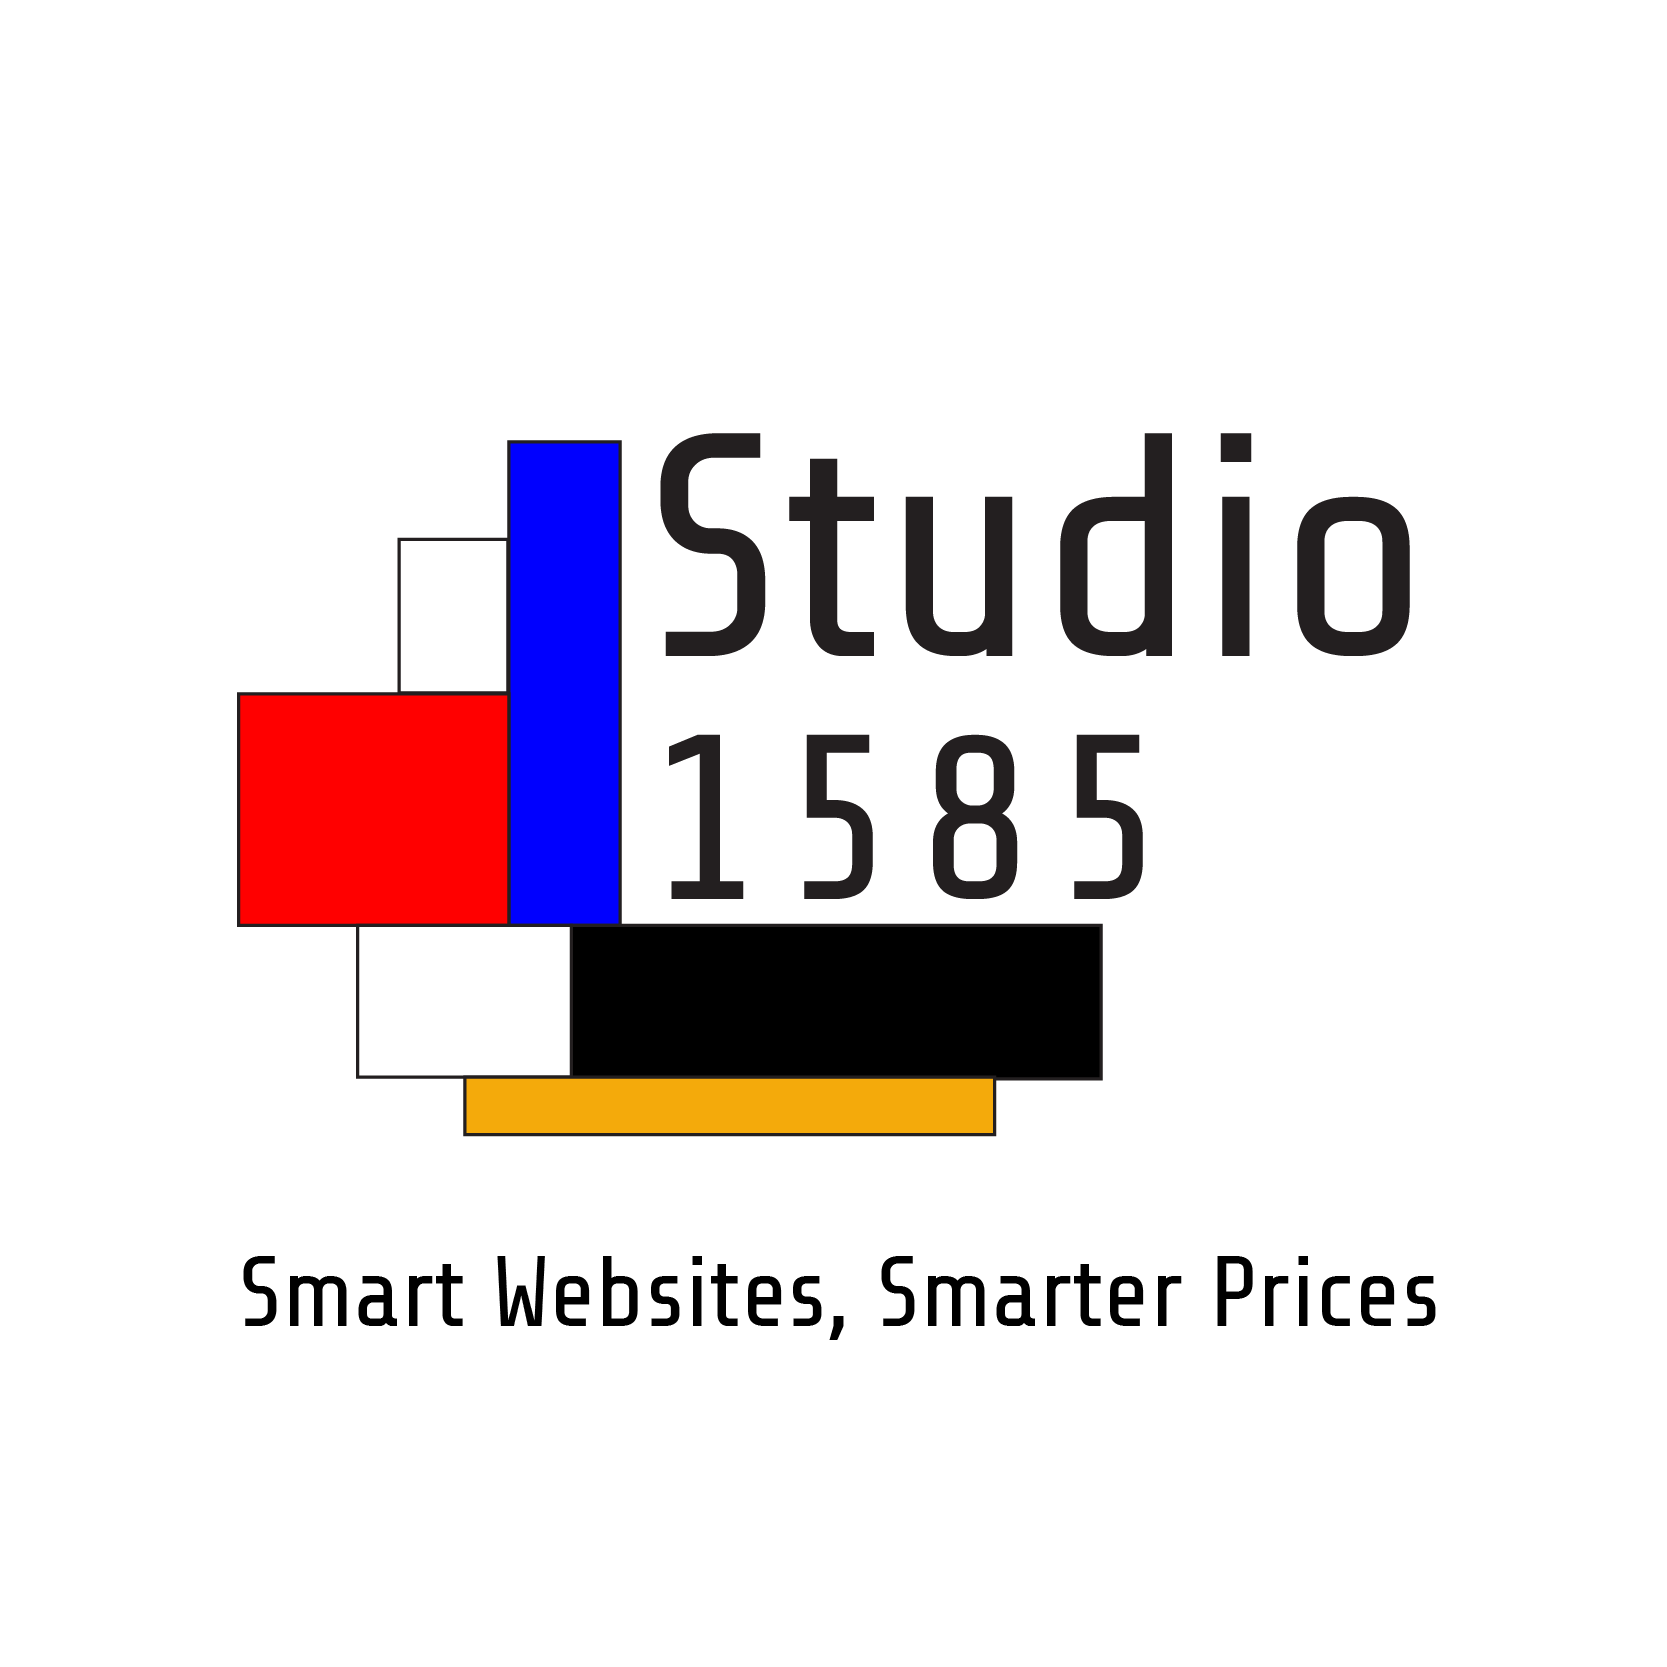 A logo for studio 1585 smart websites , smarter prices.